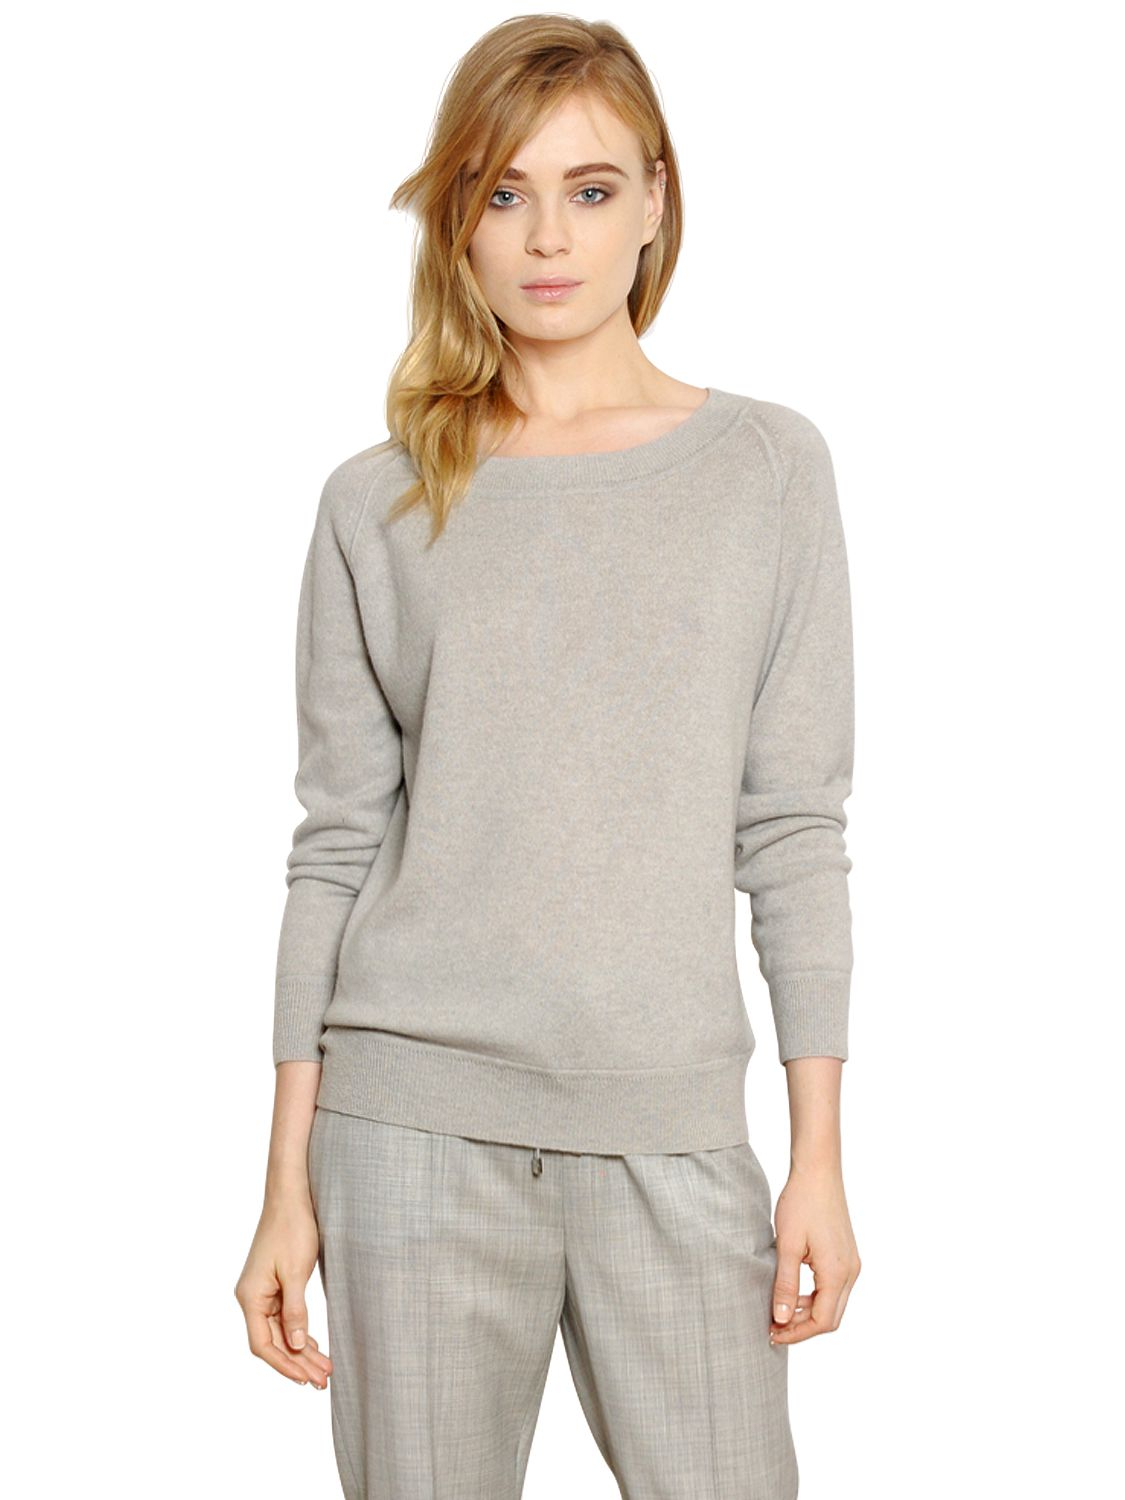 Lyst - Max Mara Cashmere Sweater in Gray